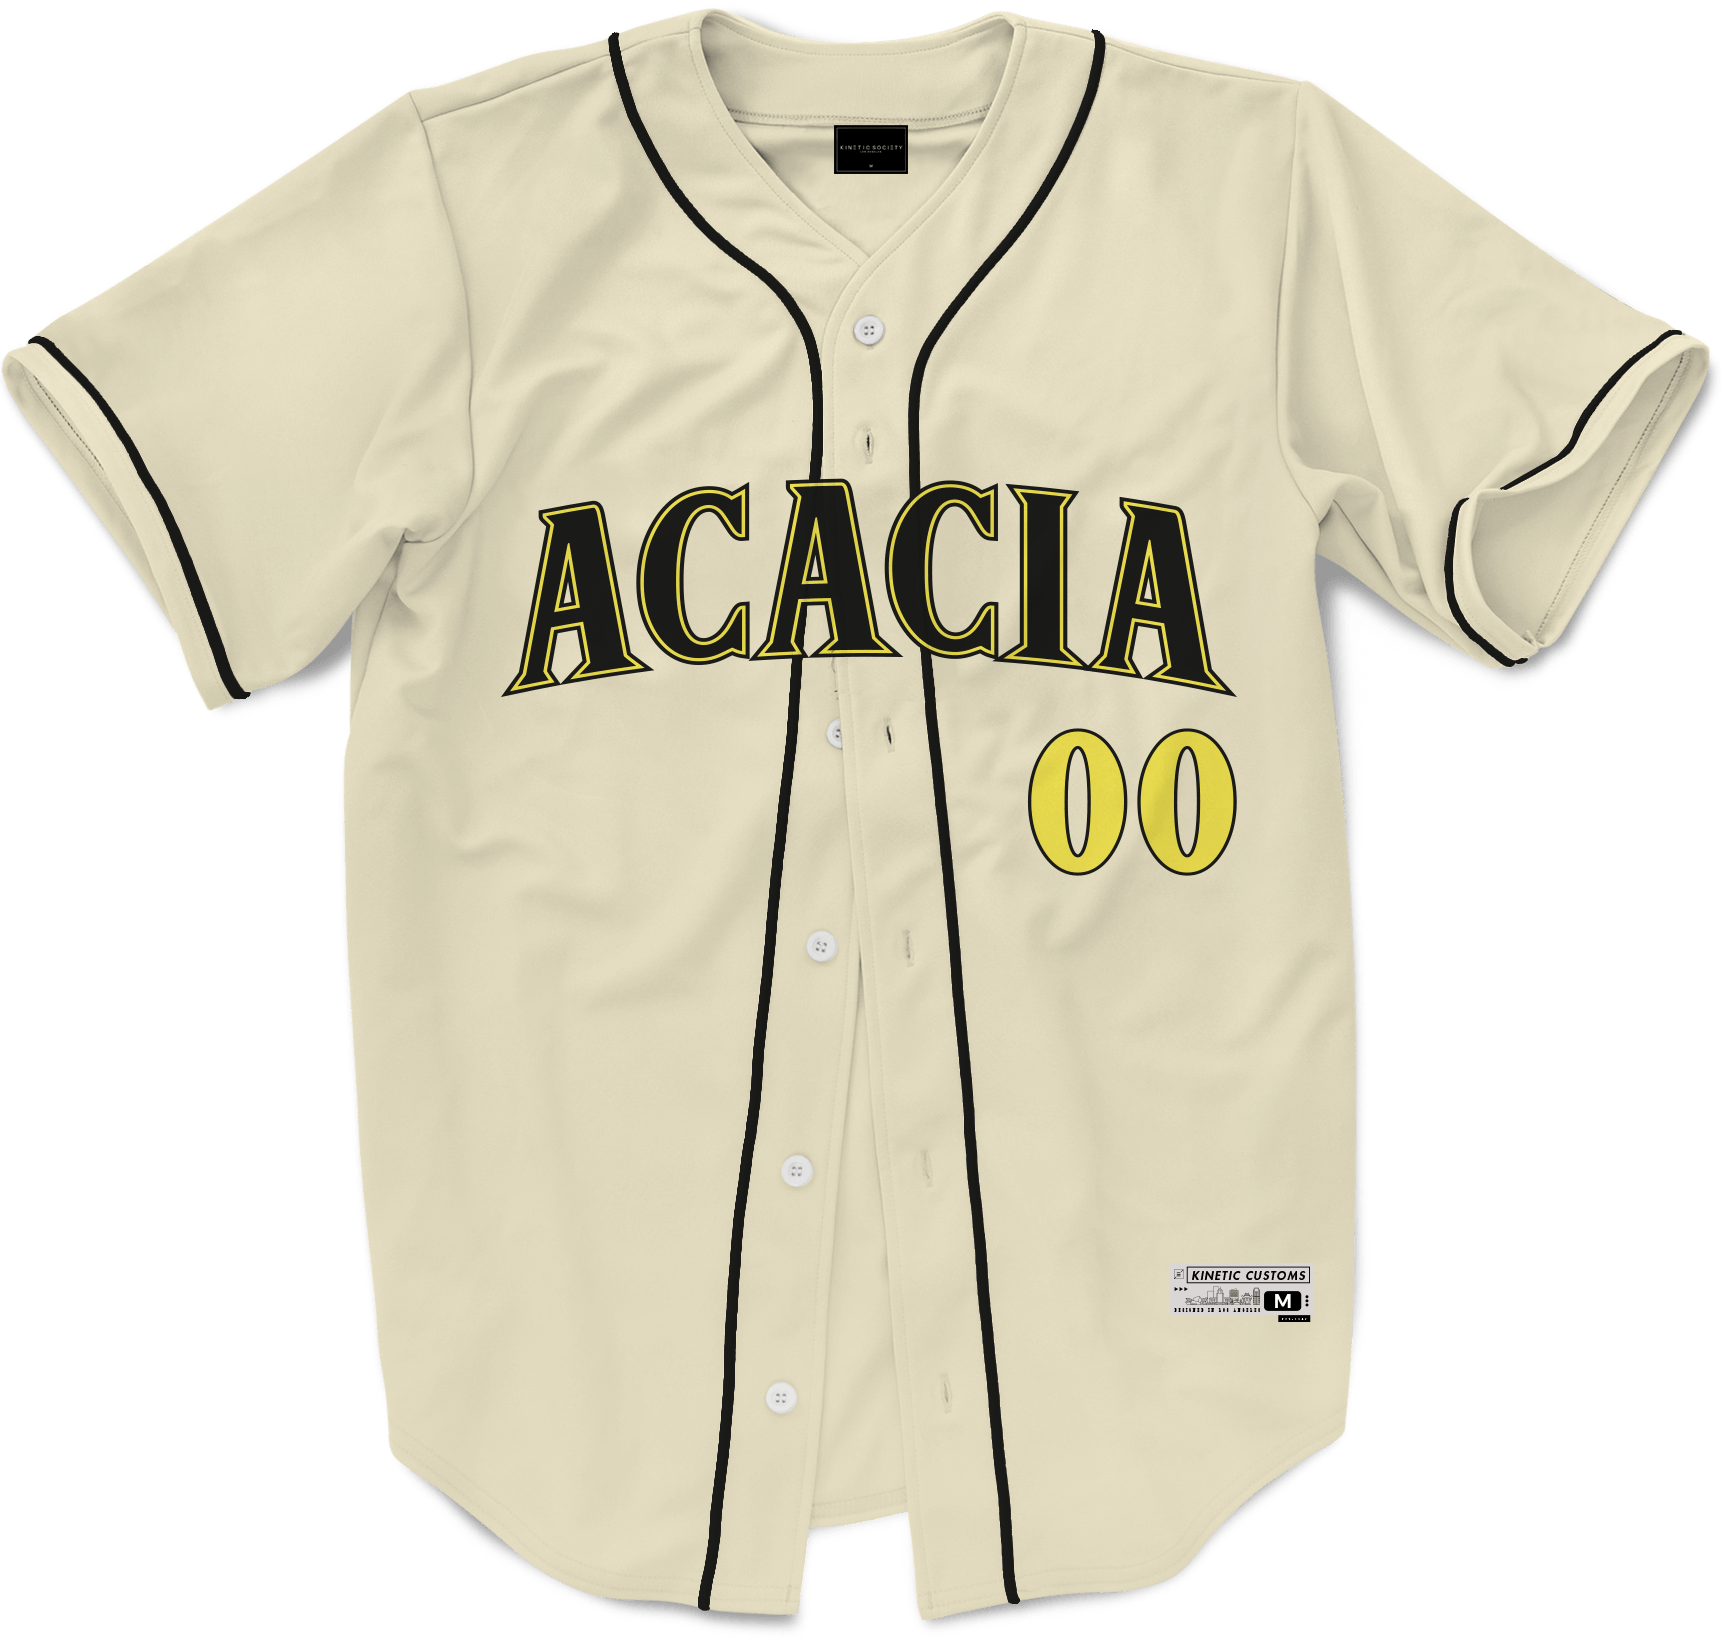 Acacia - Cream Baseball Jersey Premium Baseball Kinetic Society LLC 